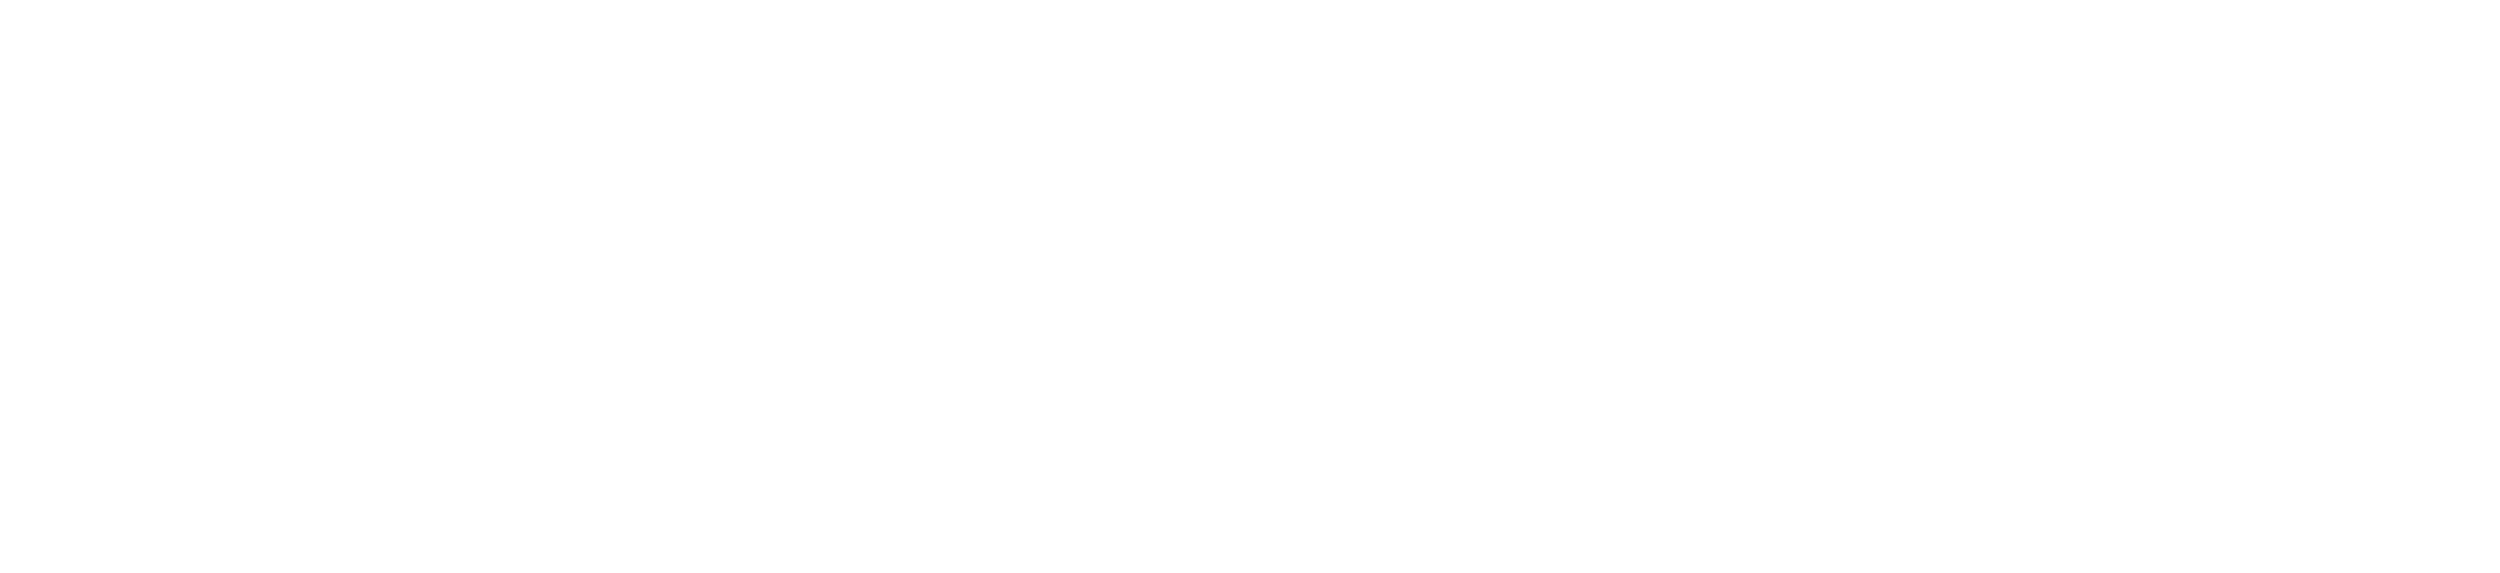 cloudmizer-logo-by-cloud-partners-white